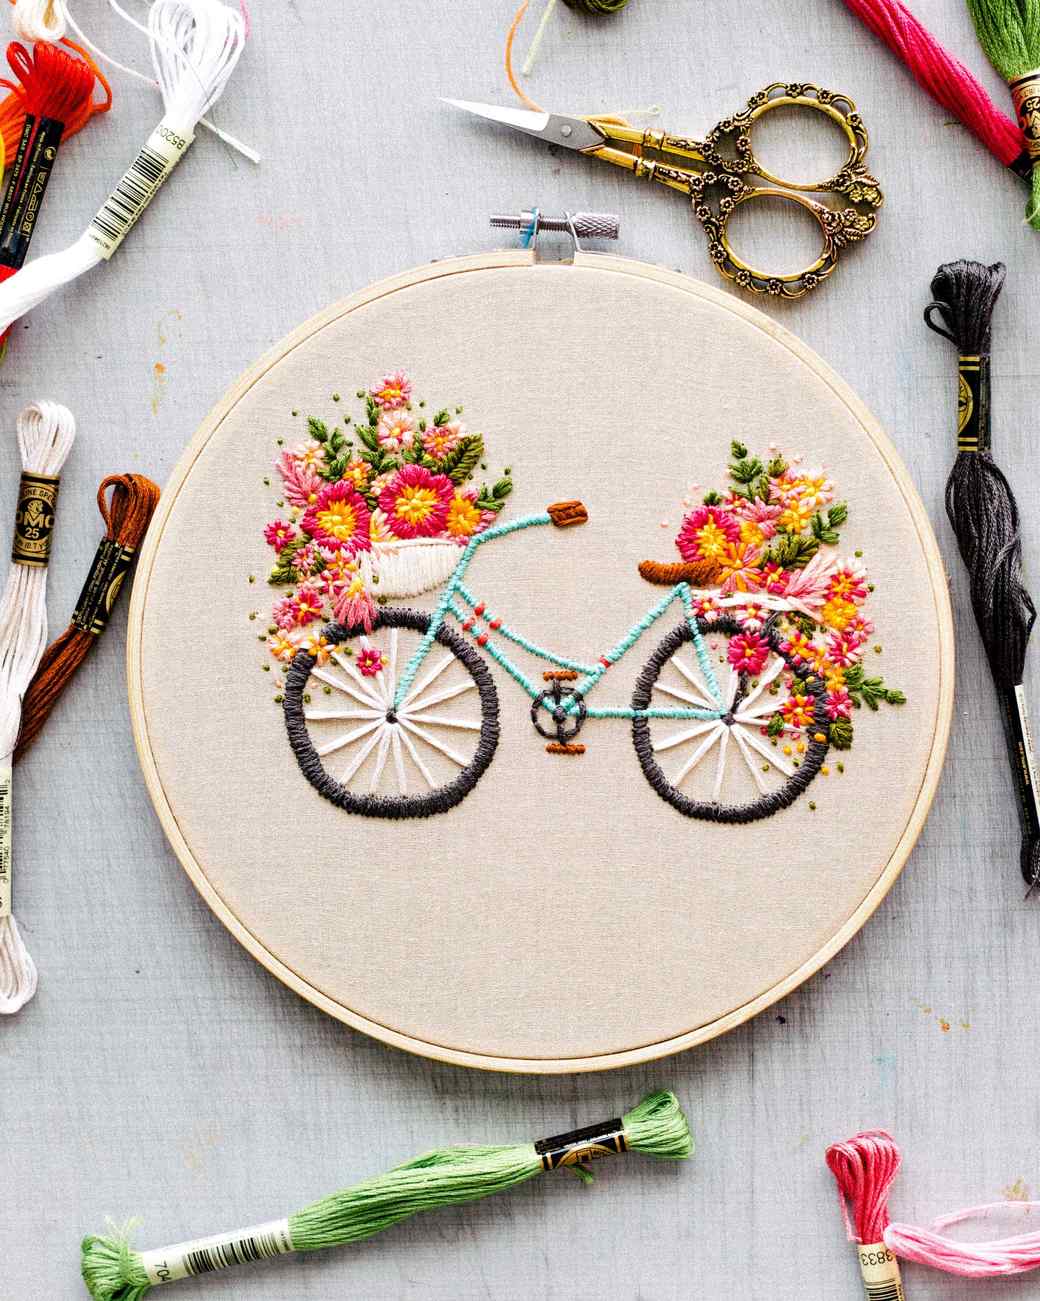 embroidery - آشنایی با اصطلاحات مد و فشن